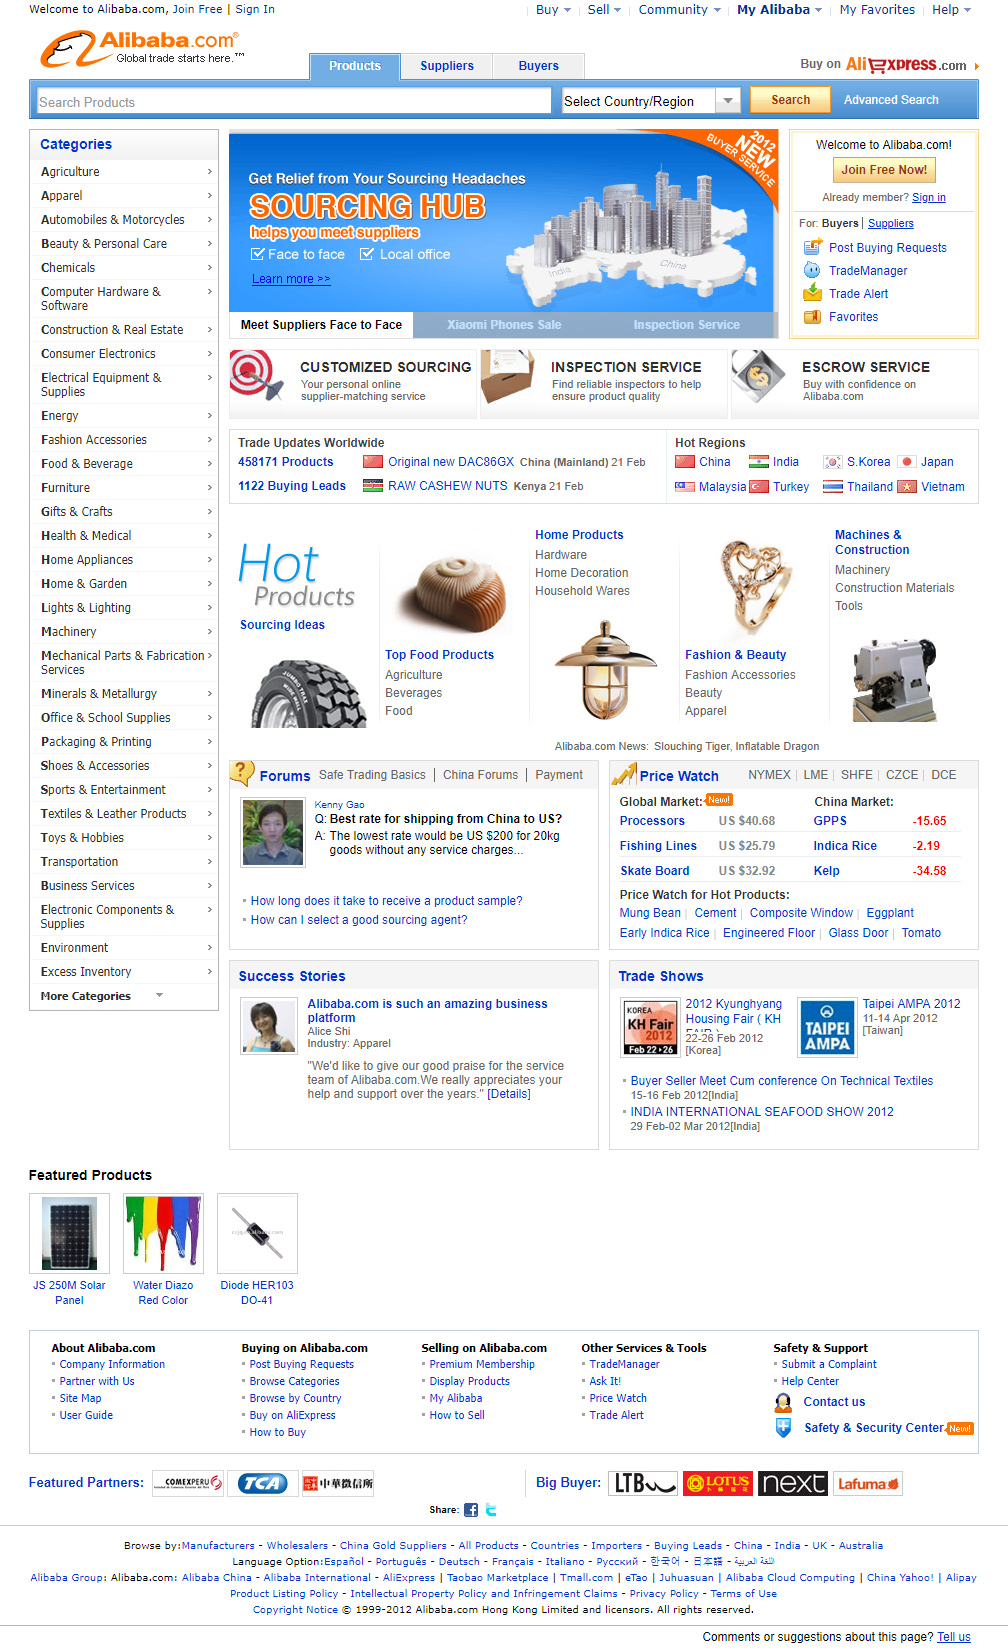 Alibaba website in 2012